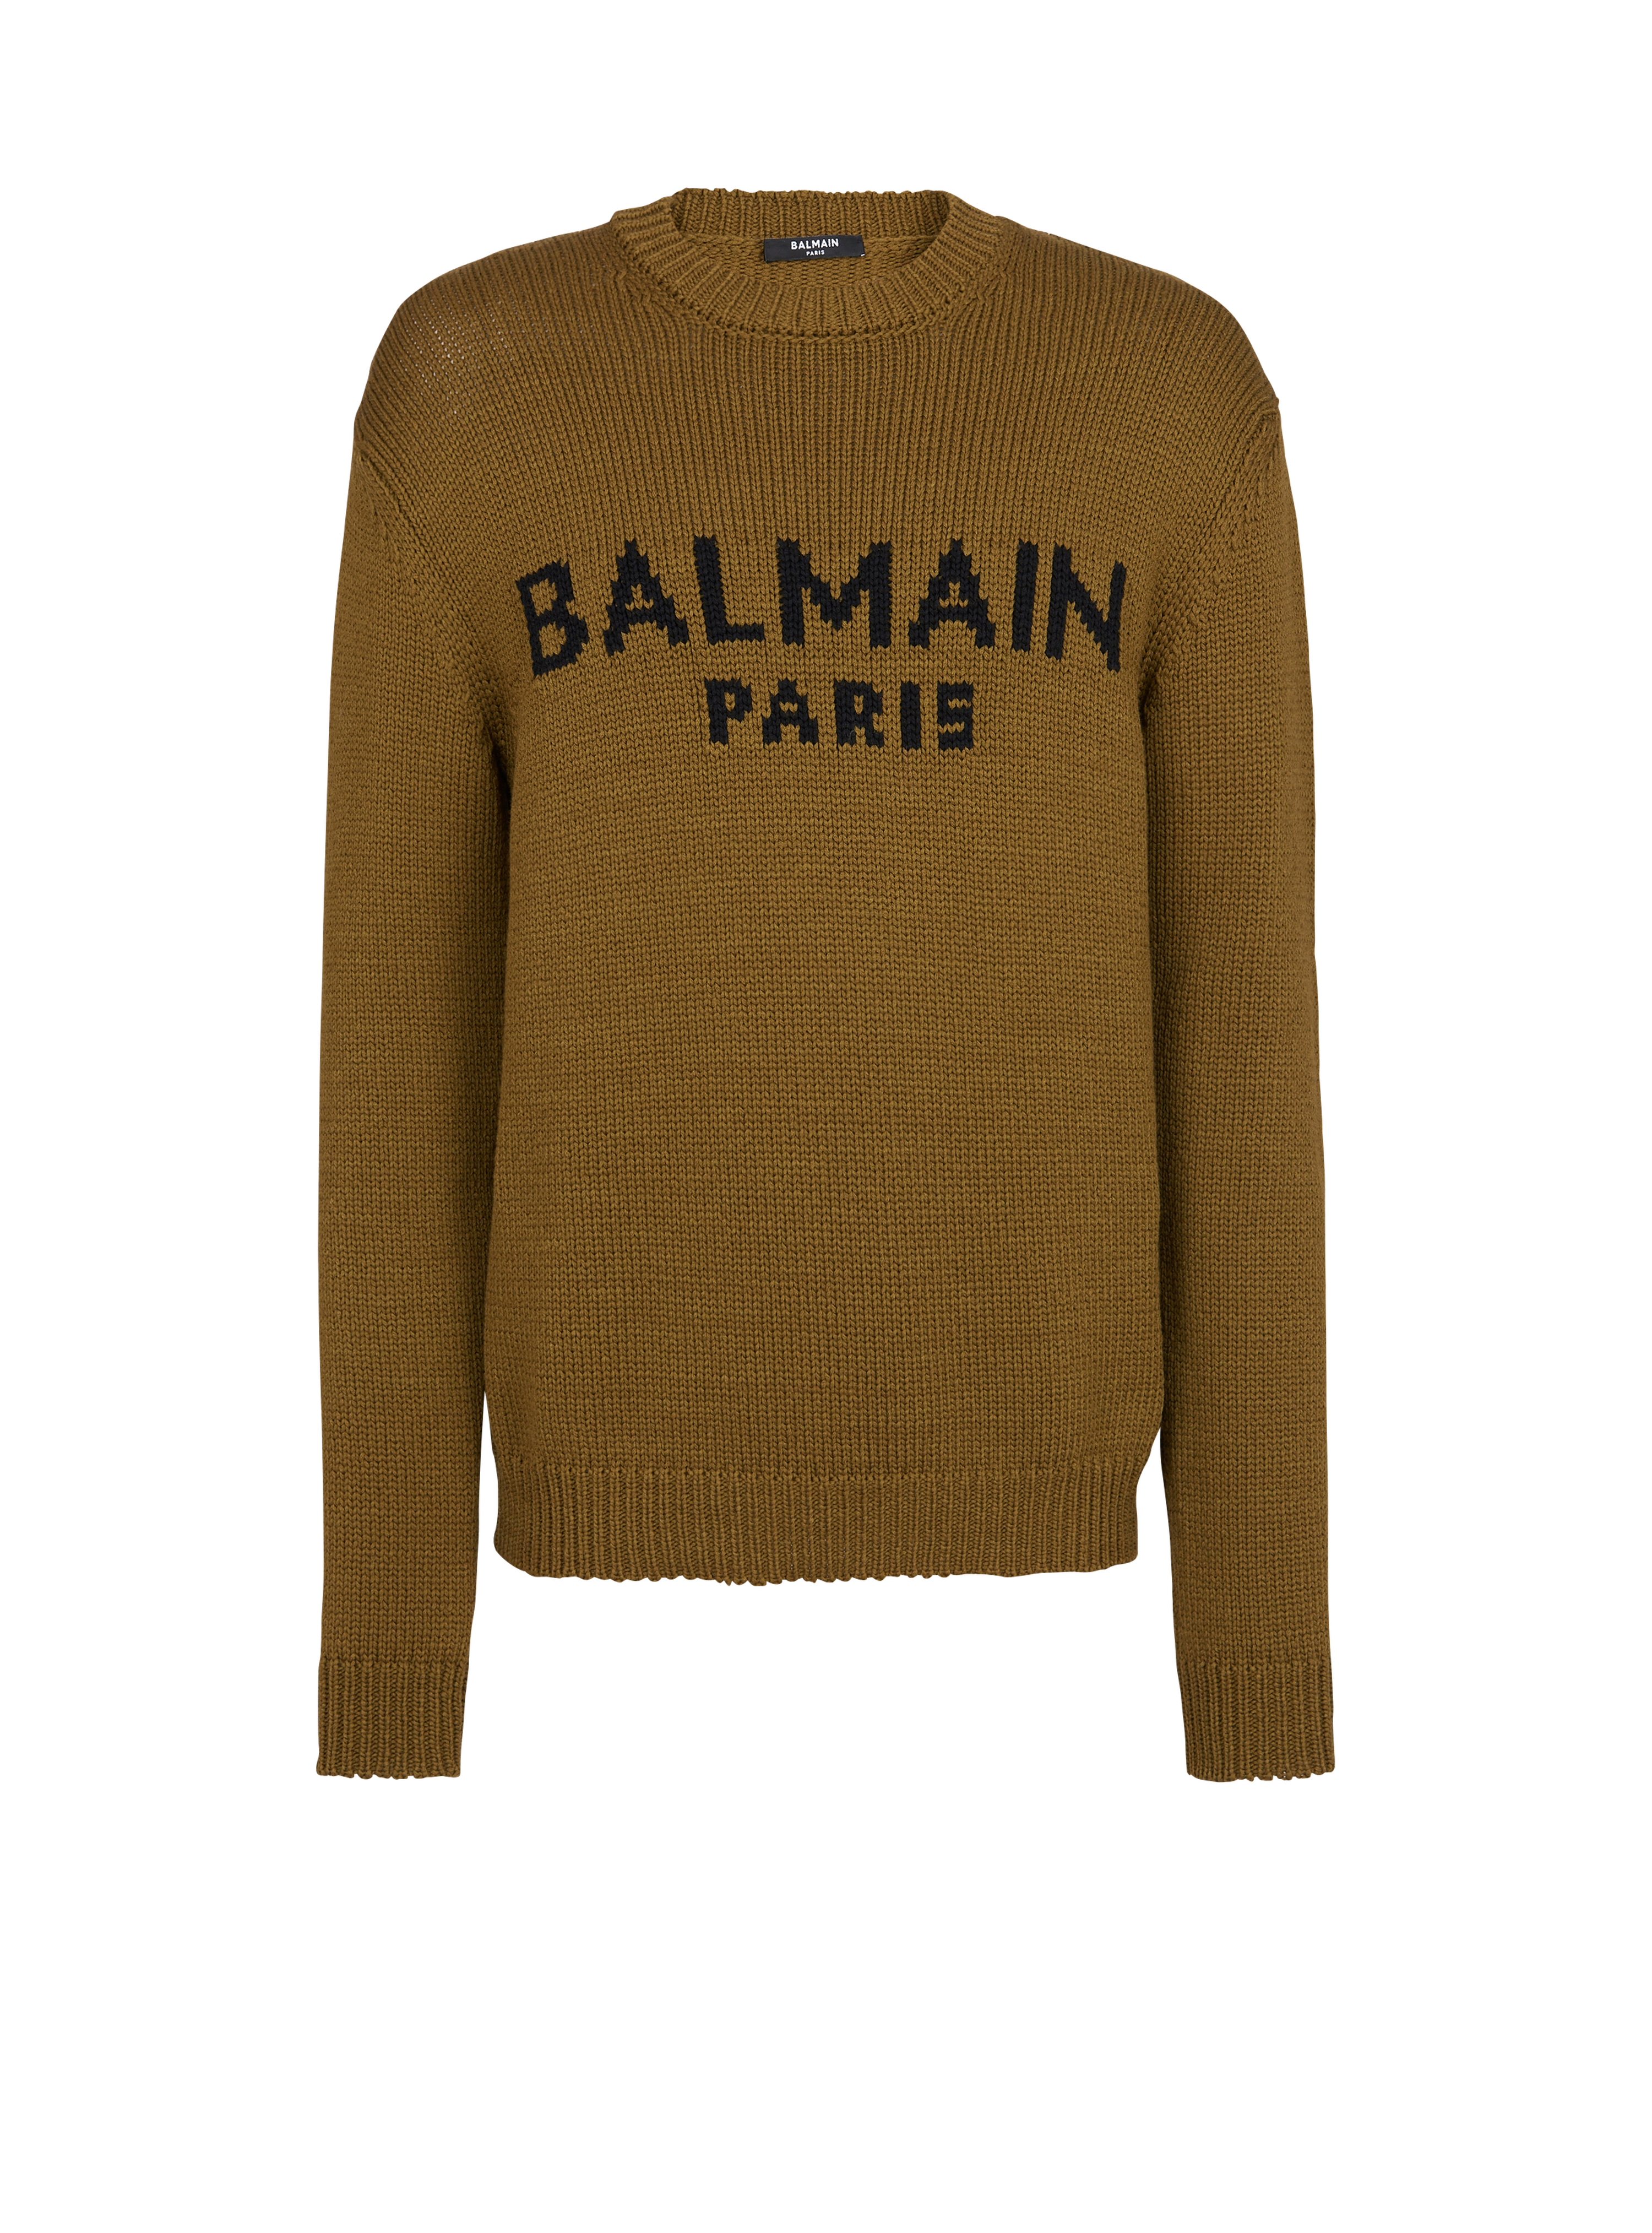 Balmain巴尔曼标志羊毛套头衫, khaki